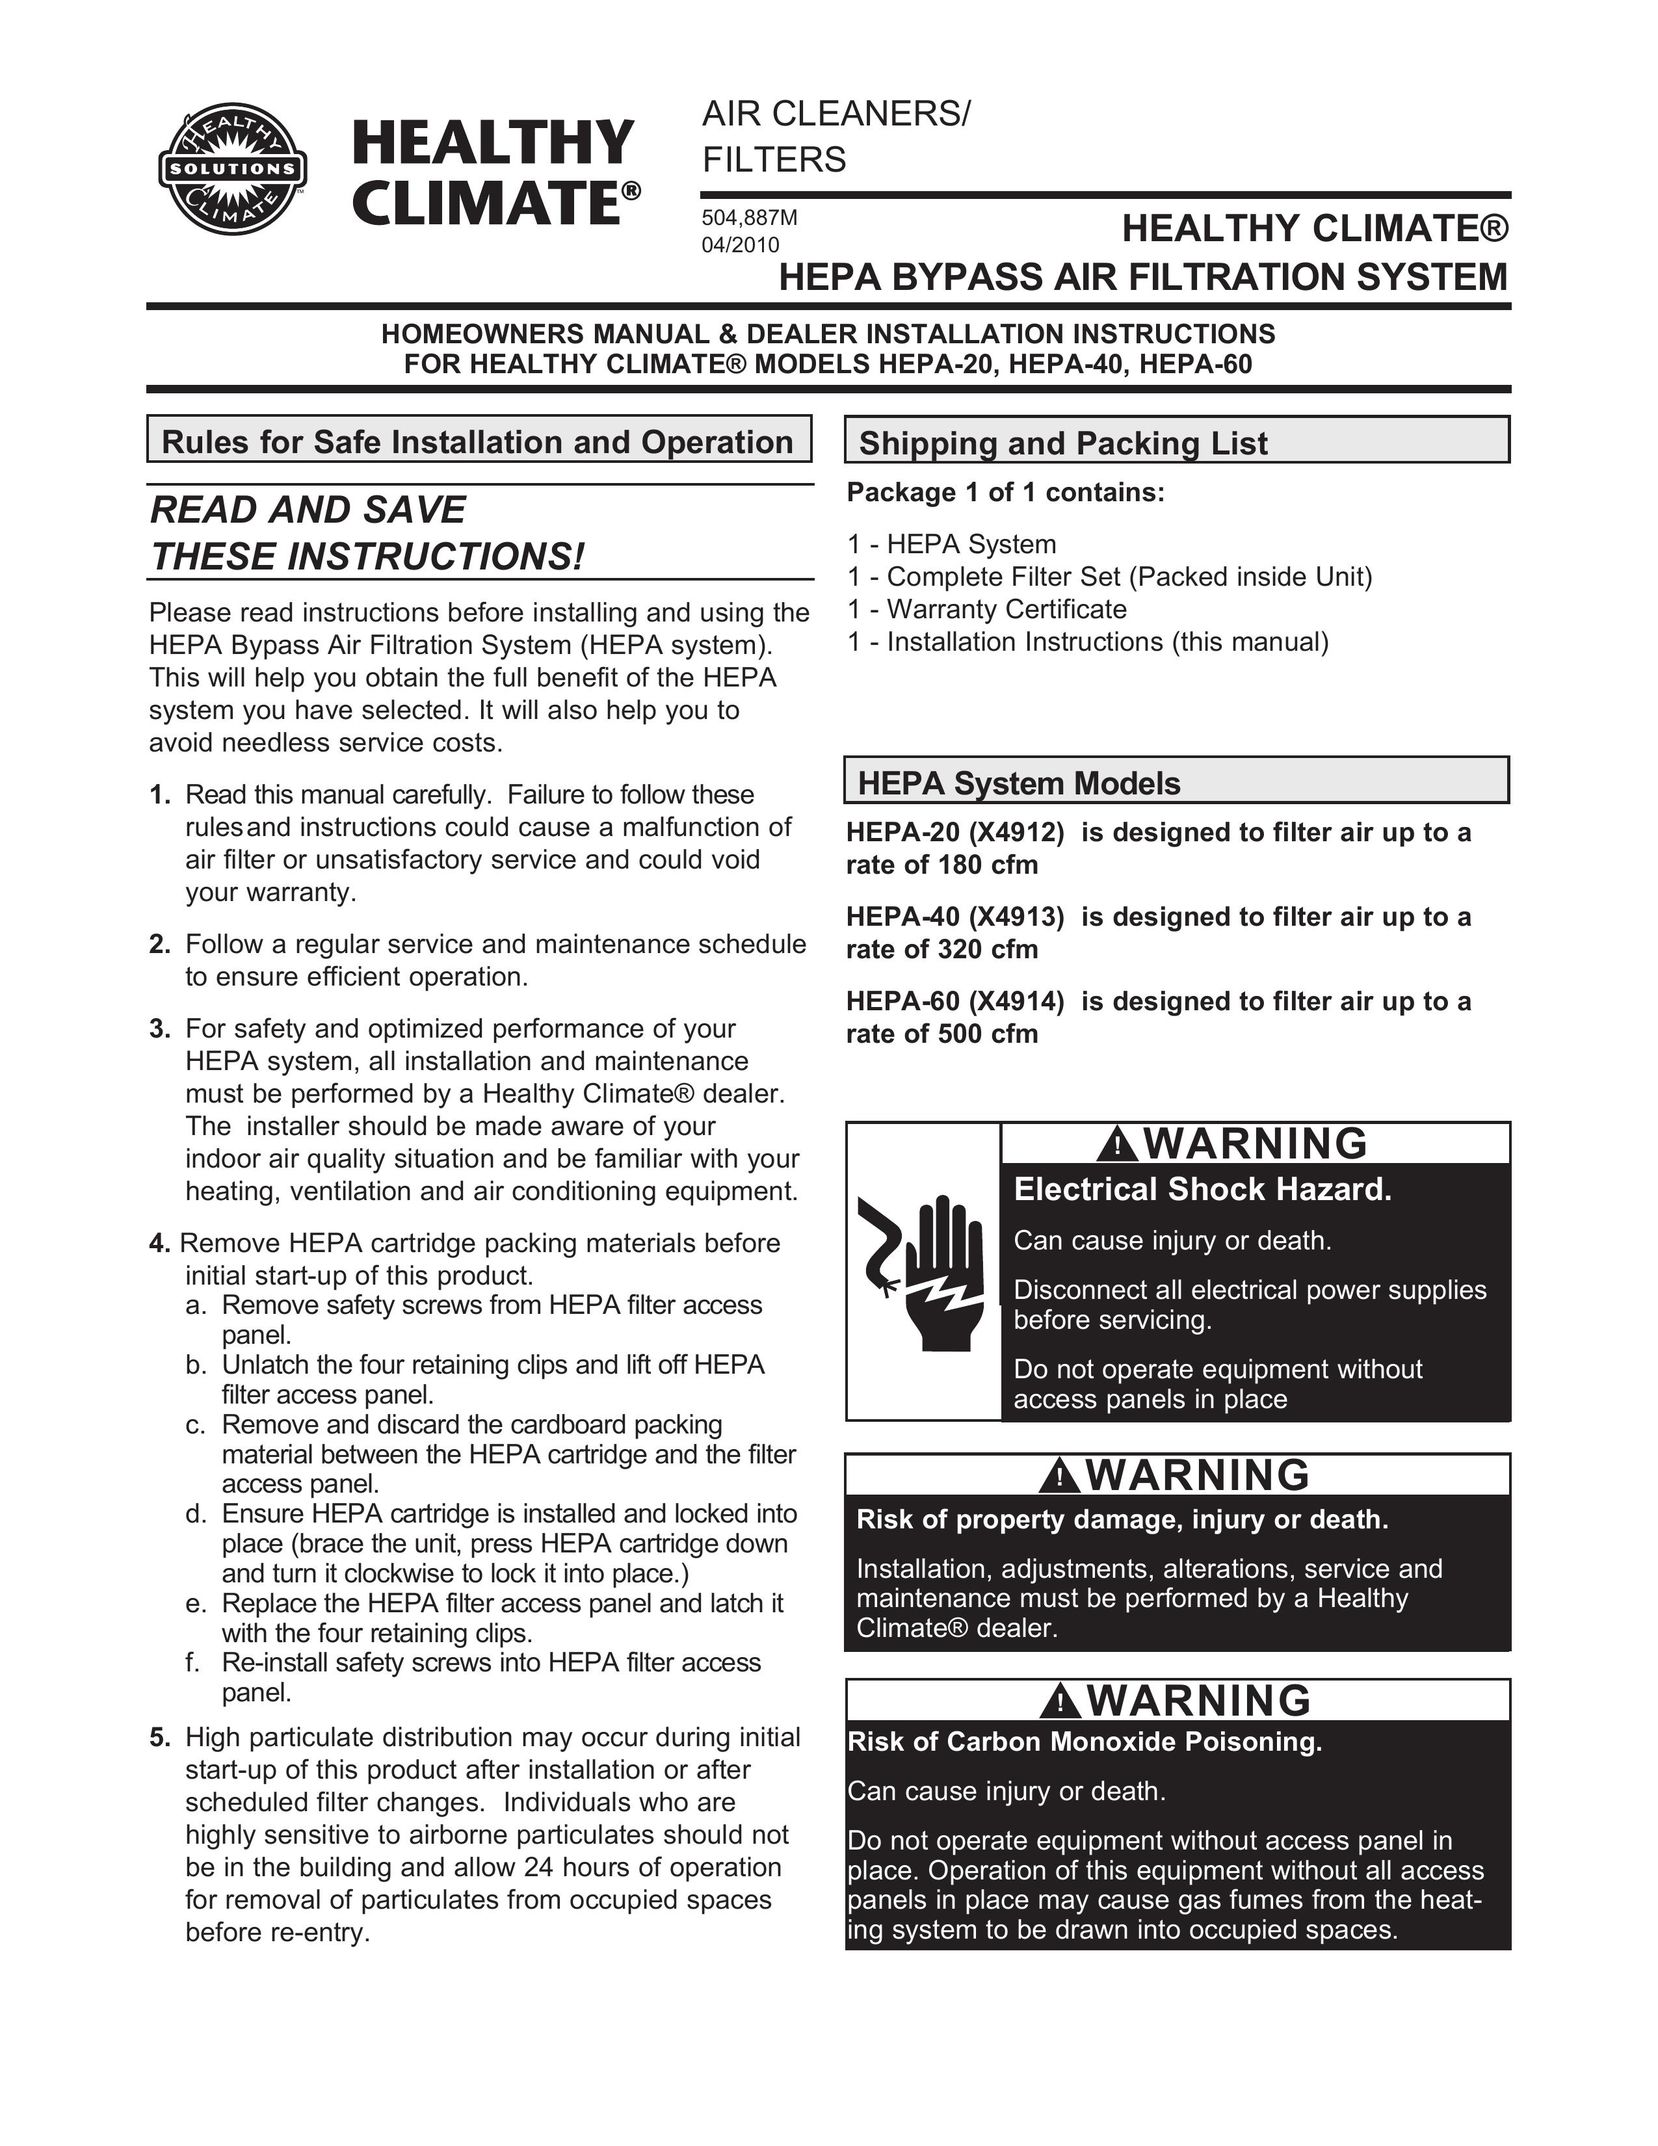 Lennox International Inc. 887M Air Cleaner User Manual